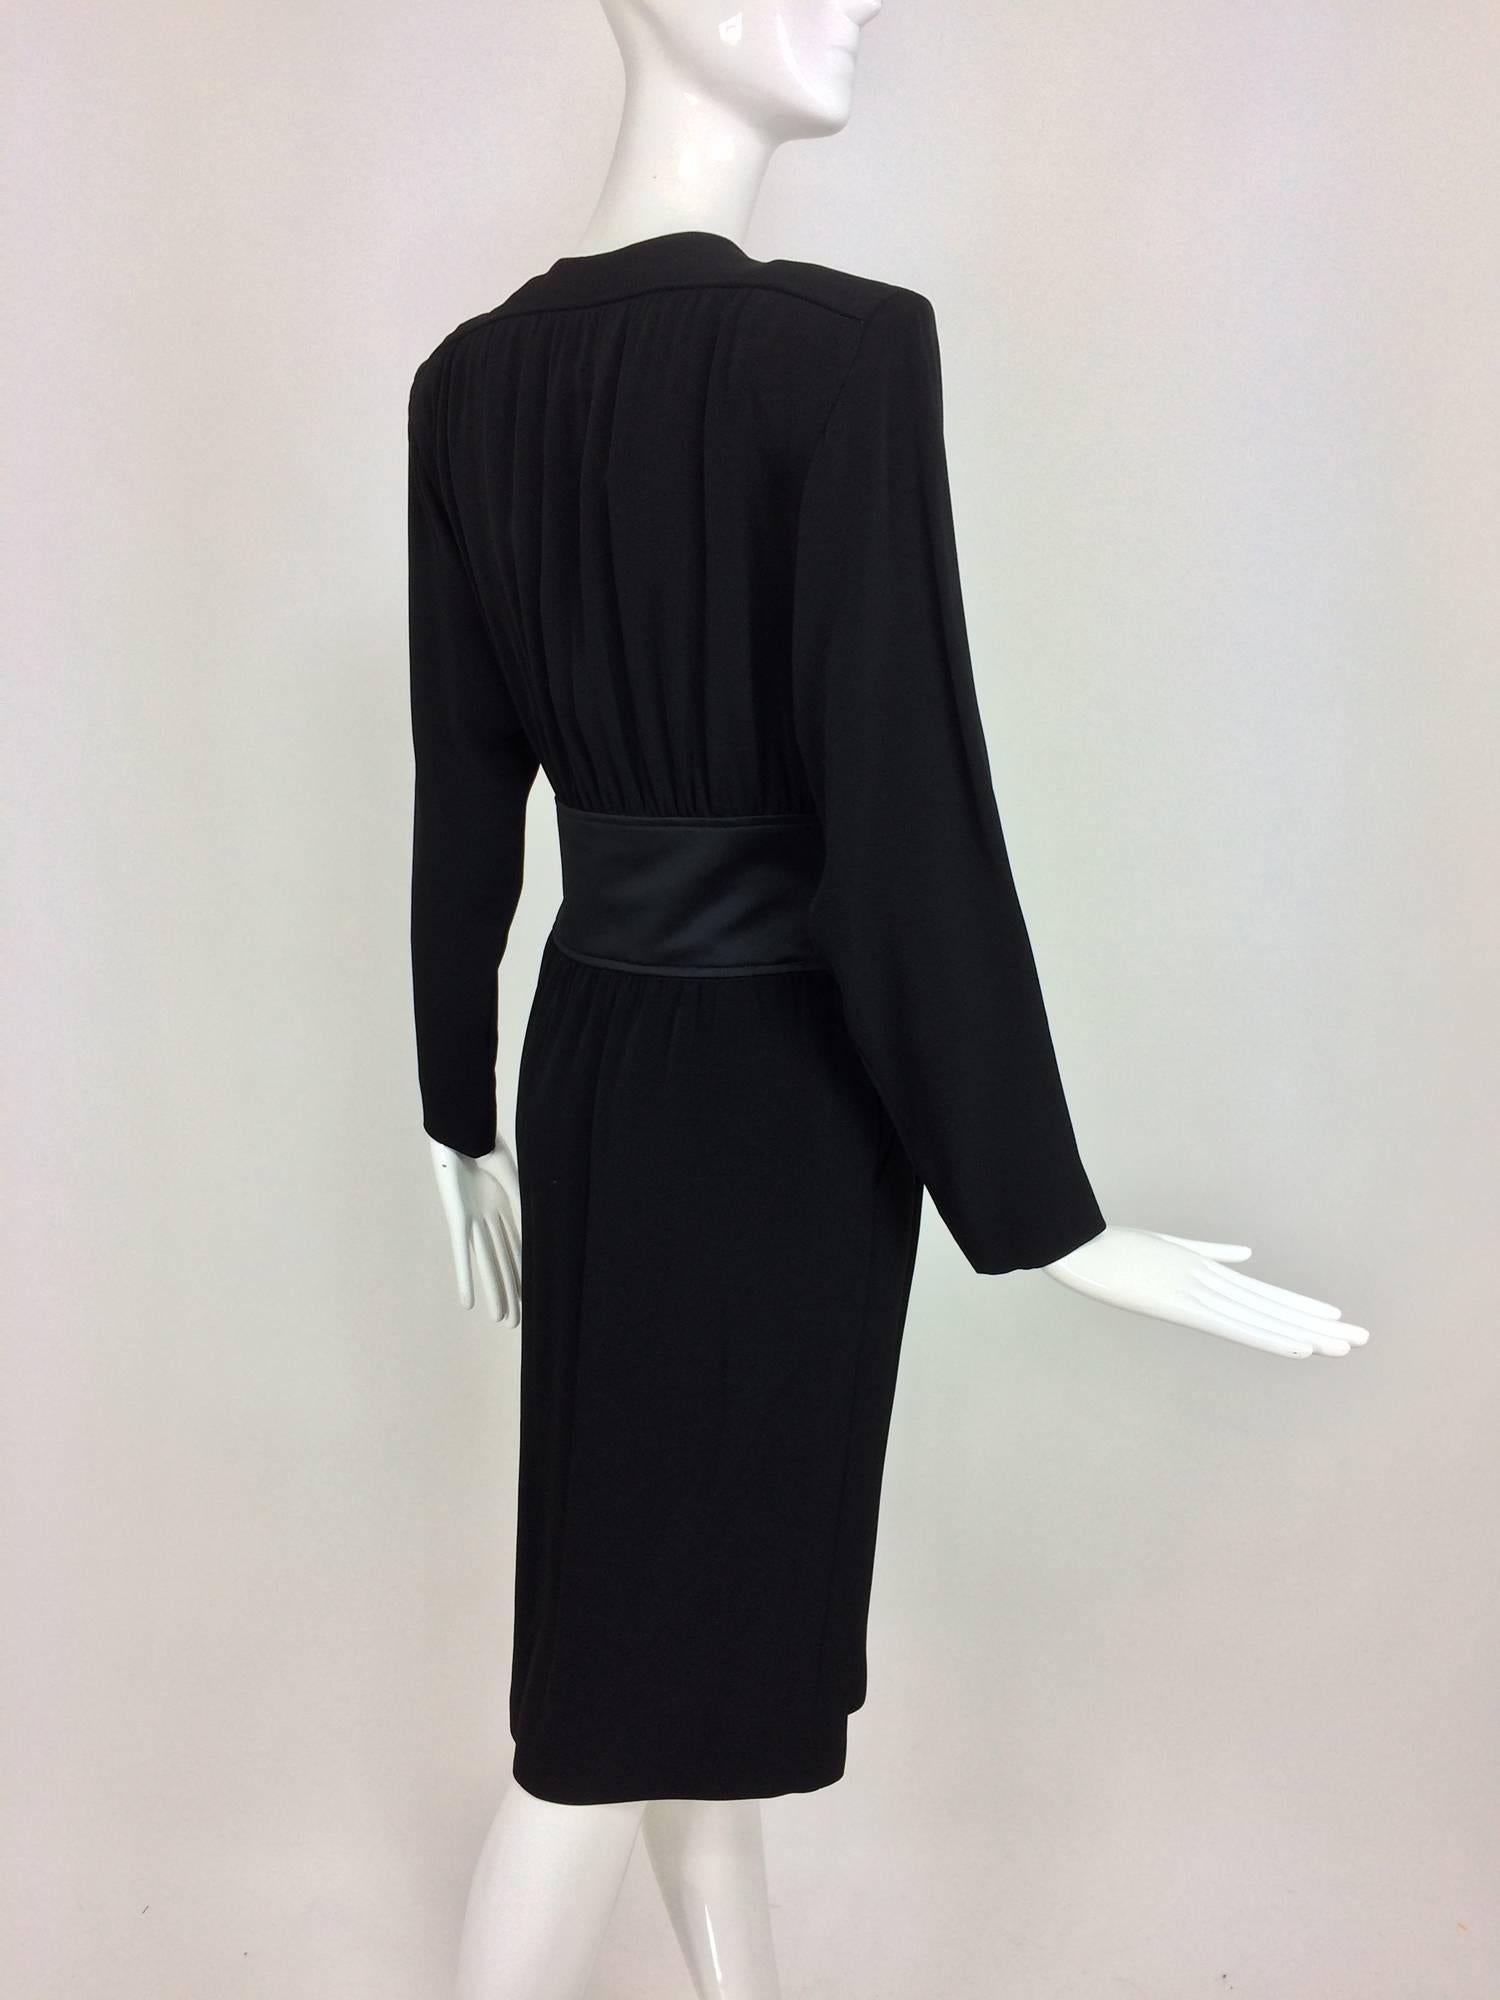 Vintage Yves St Laurent chic black crepe and satin cocktail dress 1990s unworn 1